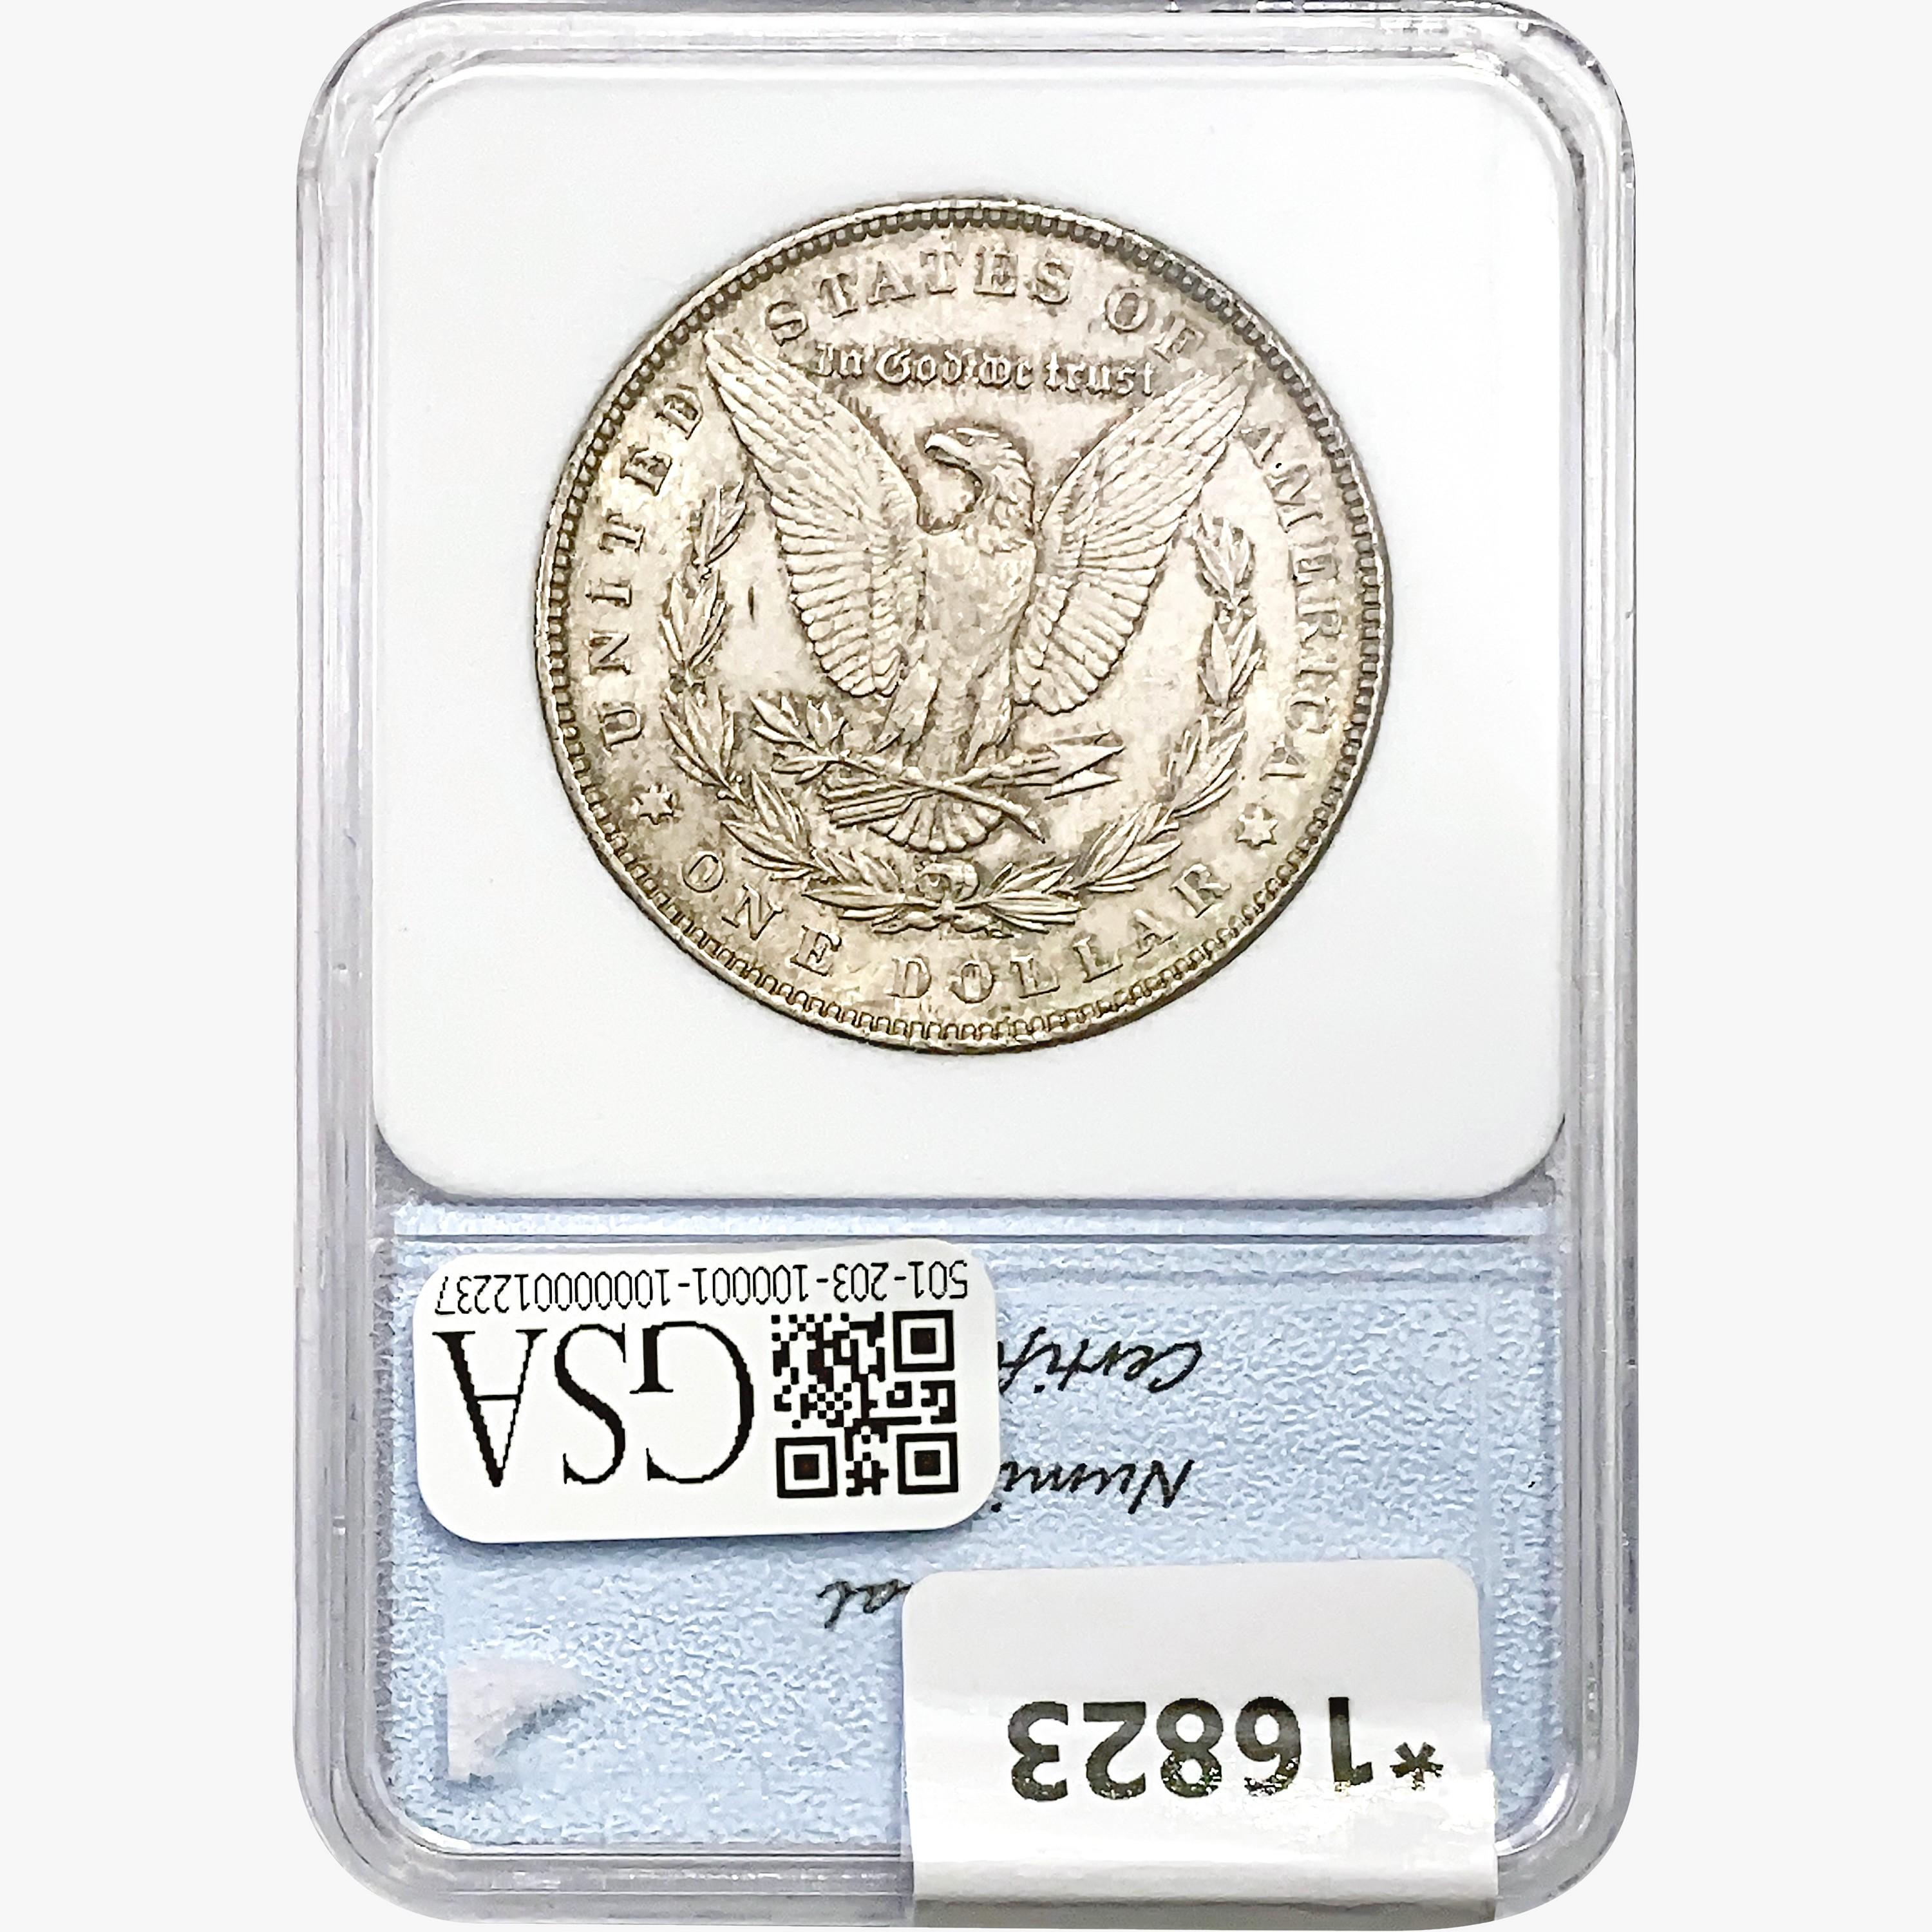 1886 Morgan Silver Dollar NNC MS64